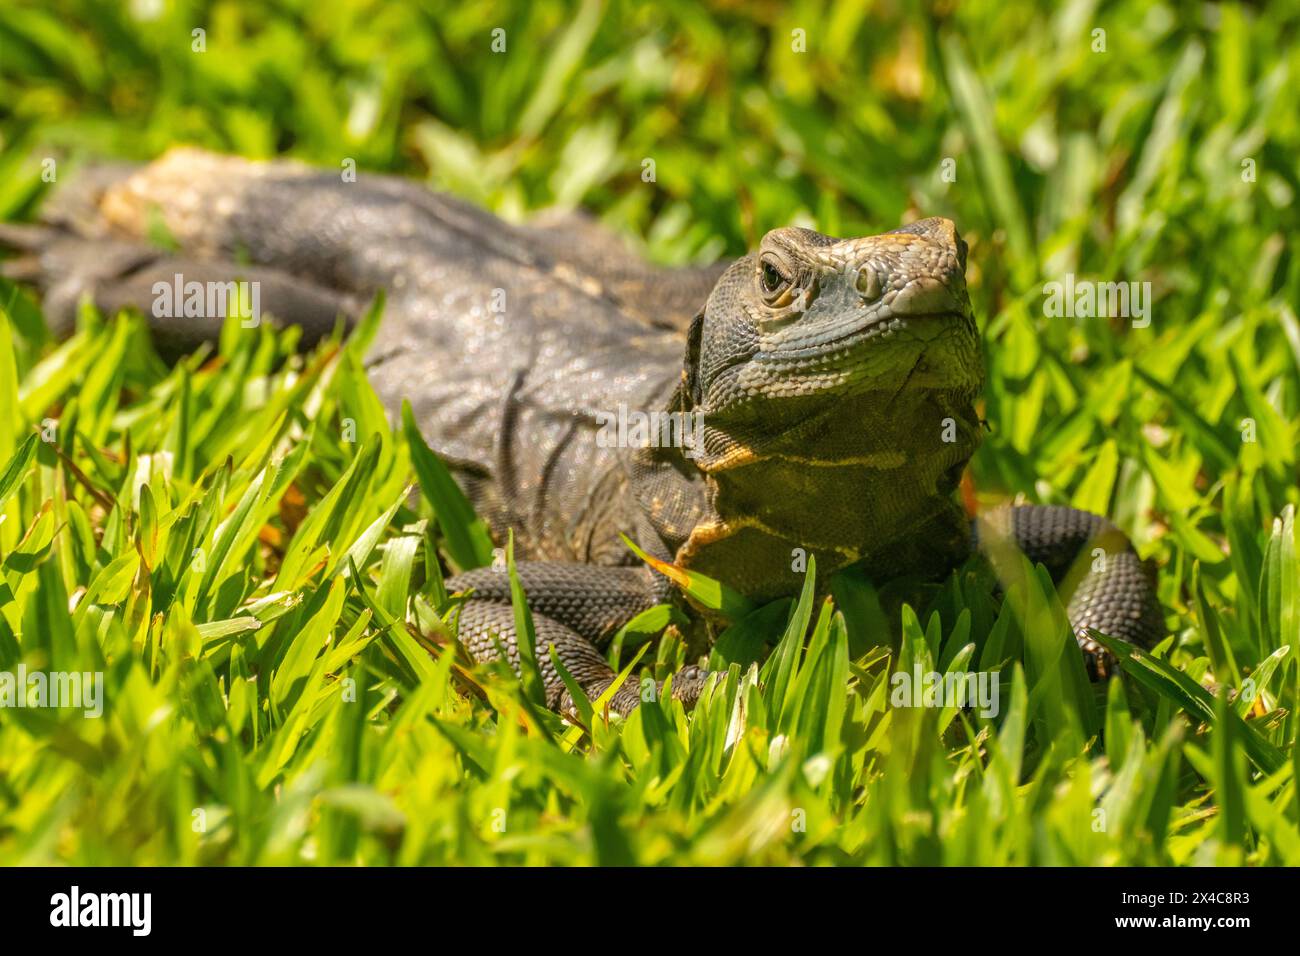 Costa Rica, Parque Nacional Carara. Black iguana sunning. Stock Photo